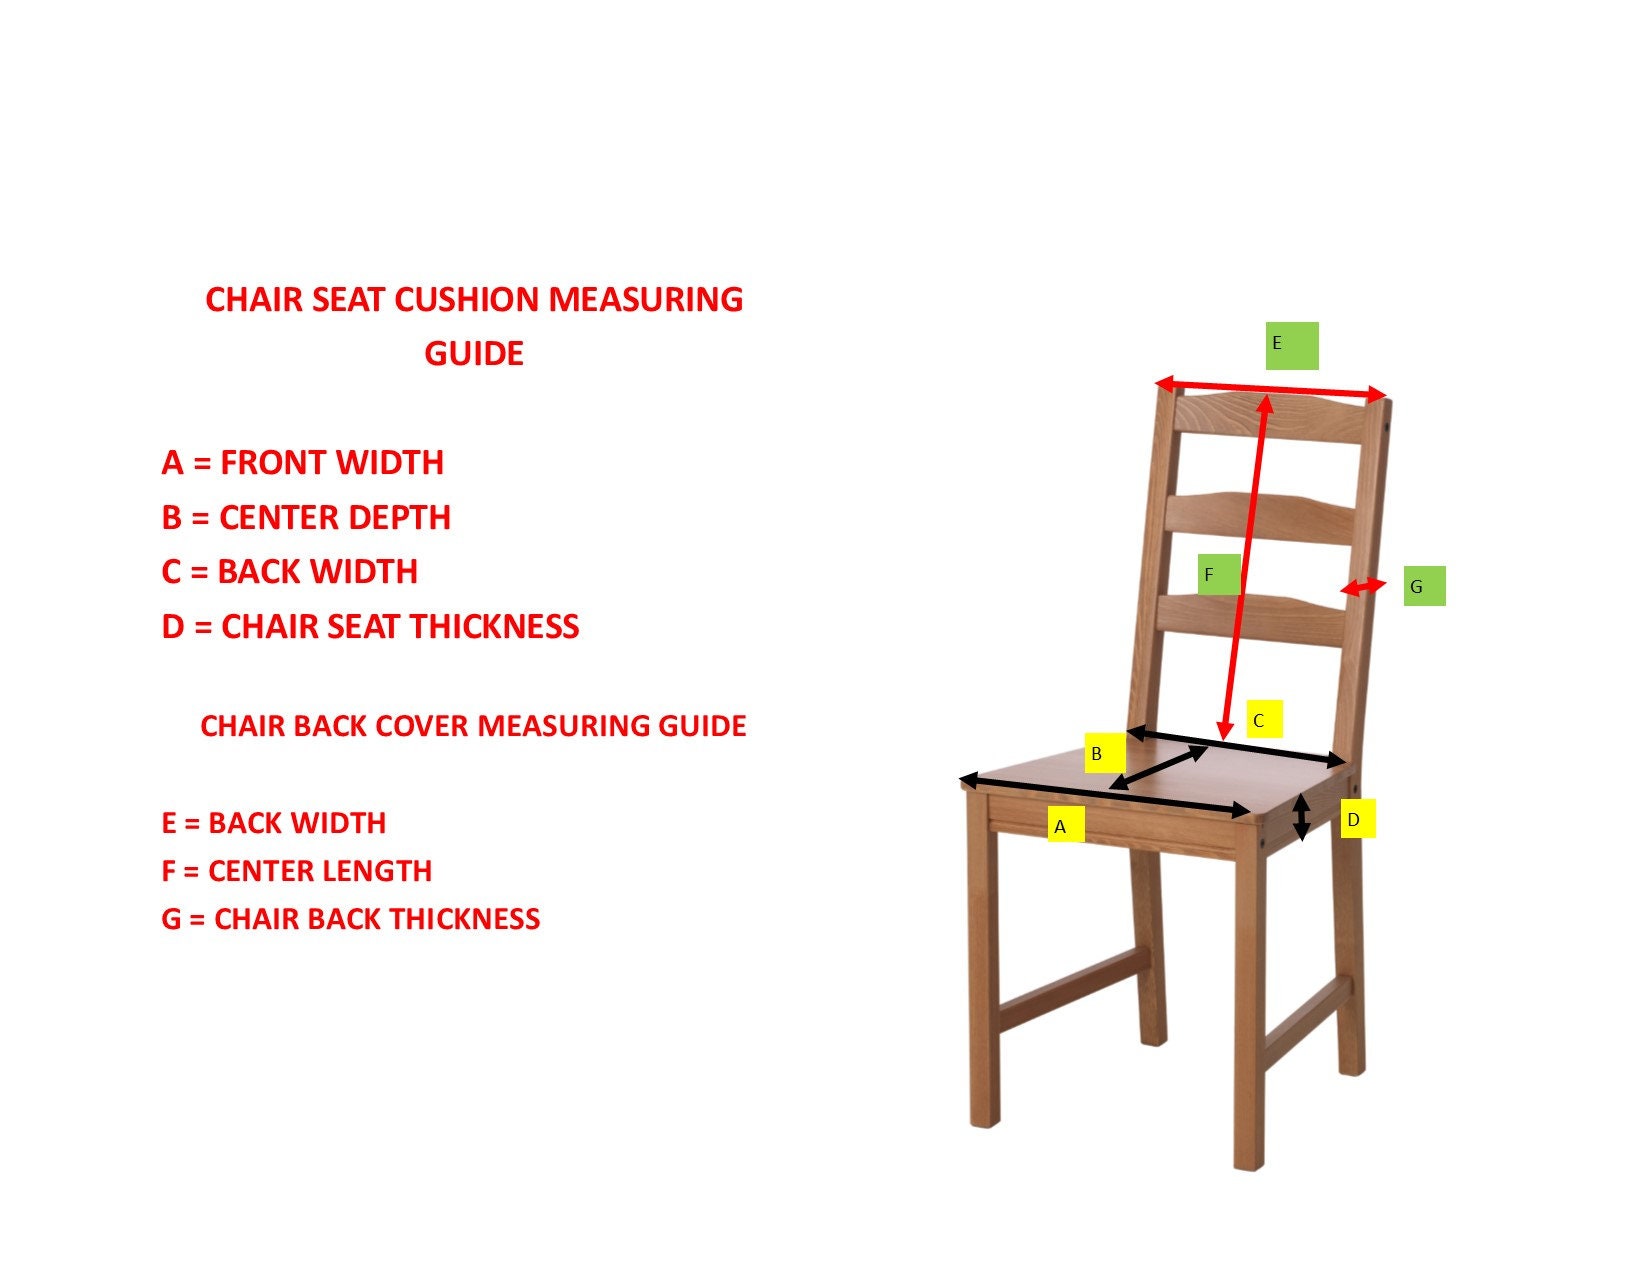 Ticking Stripe Black Rocking Chair Cushions - Latex Foam Fill Standard - See Size Guide / Black